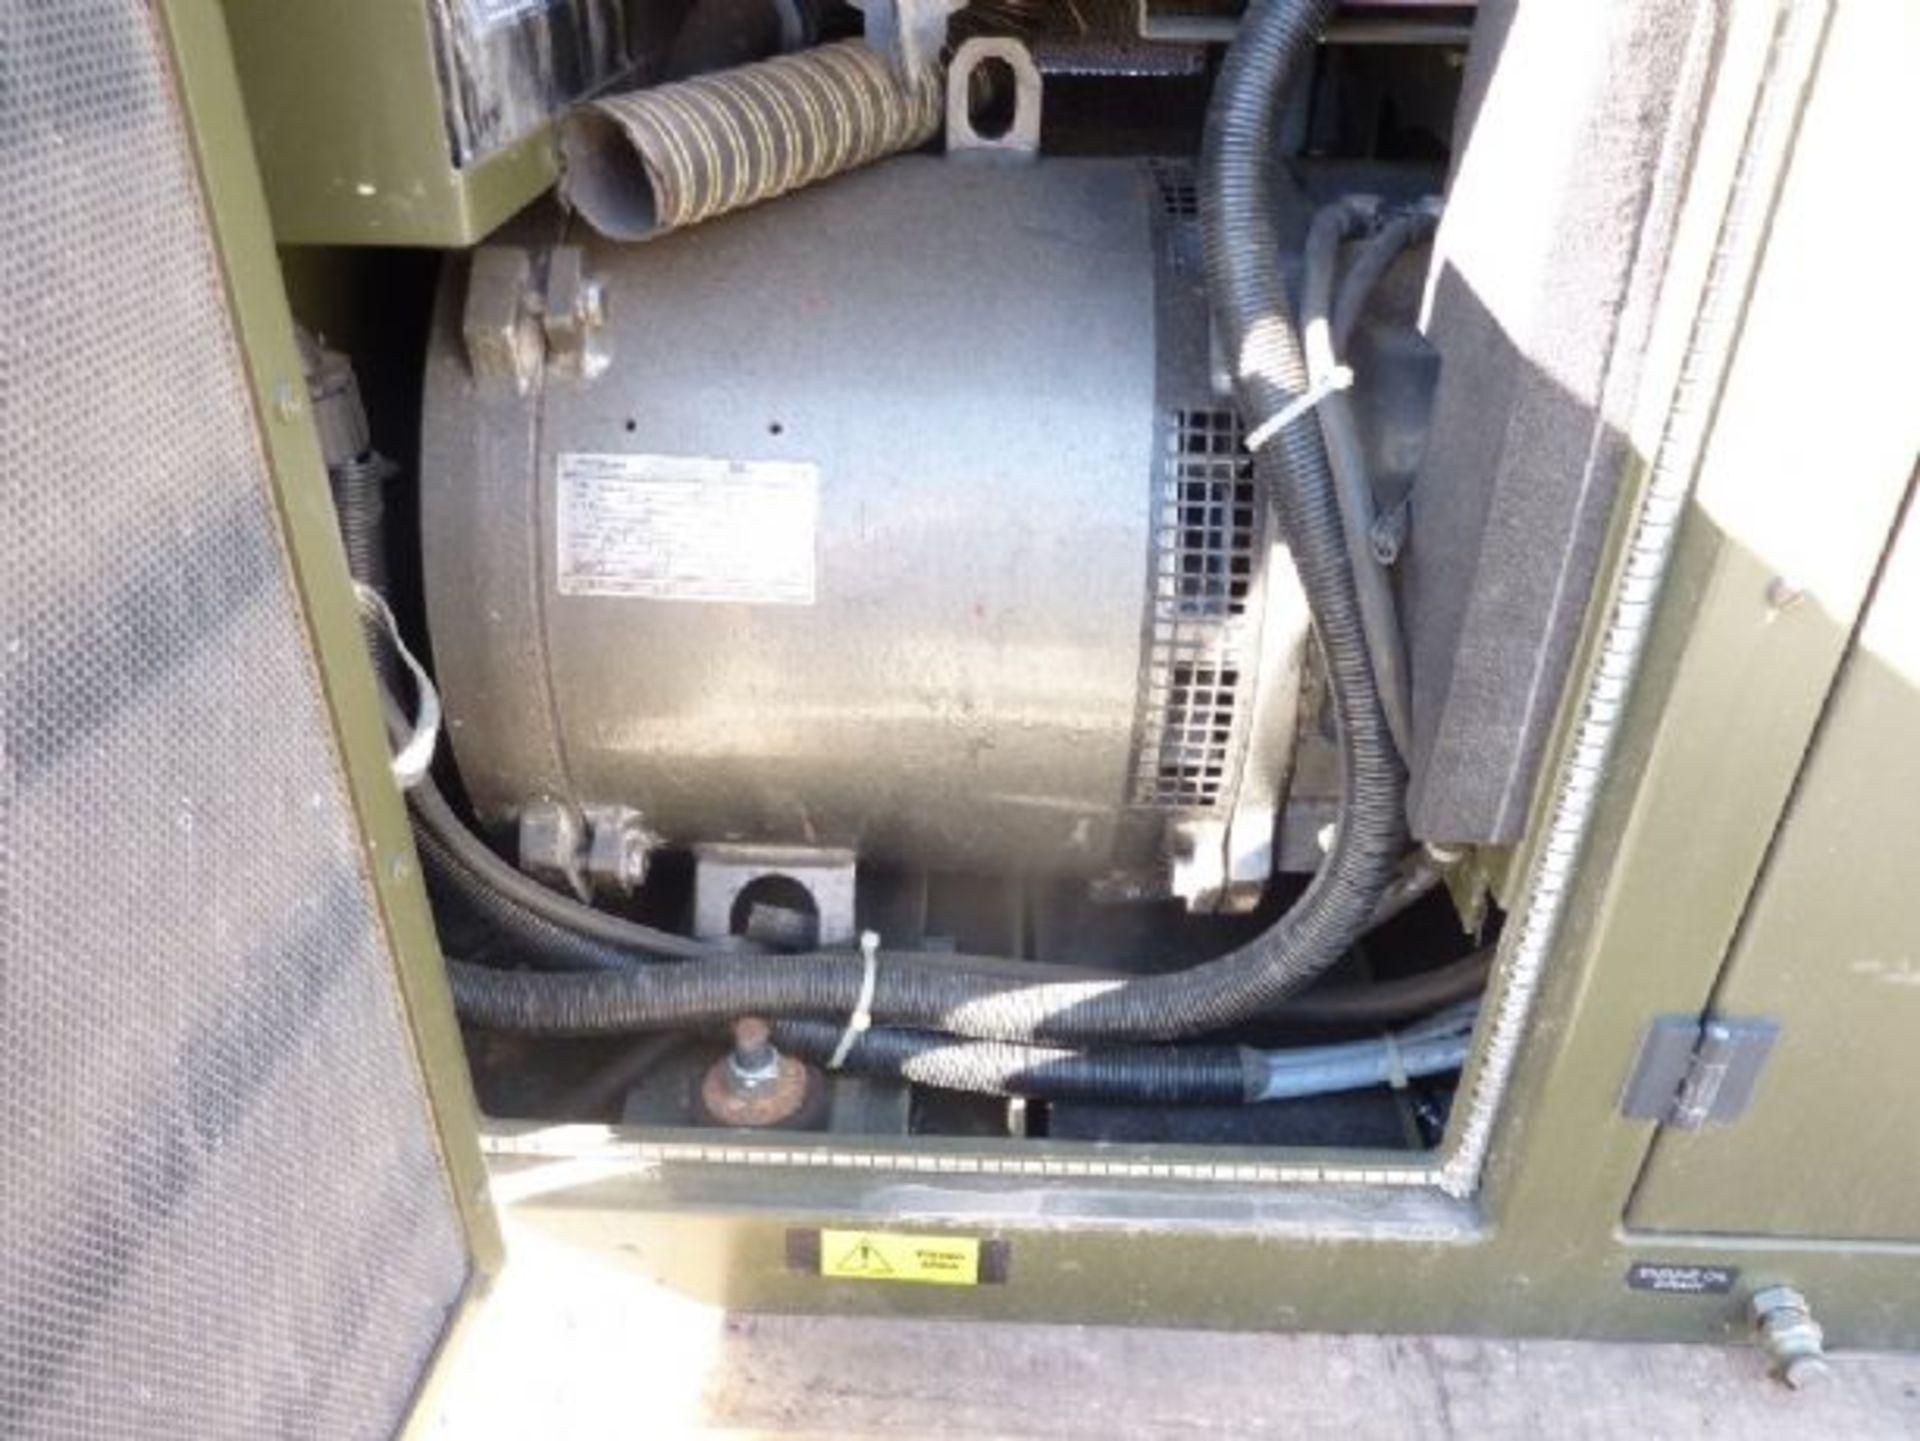 Generator CMCA MPG-020 30kVA 3Ph - Image 2 of 4